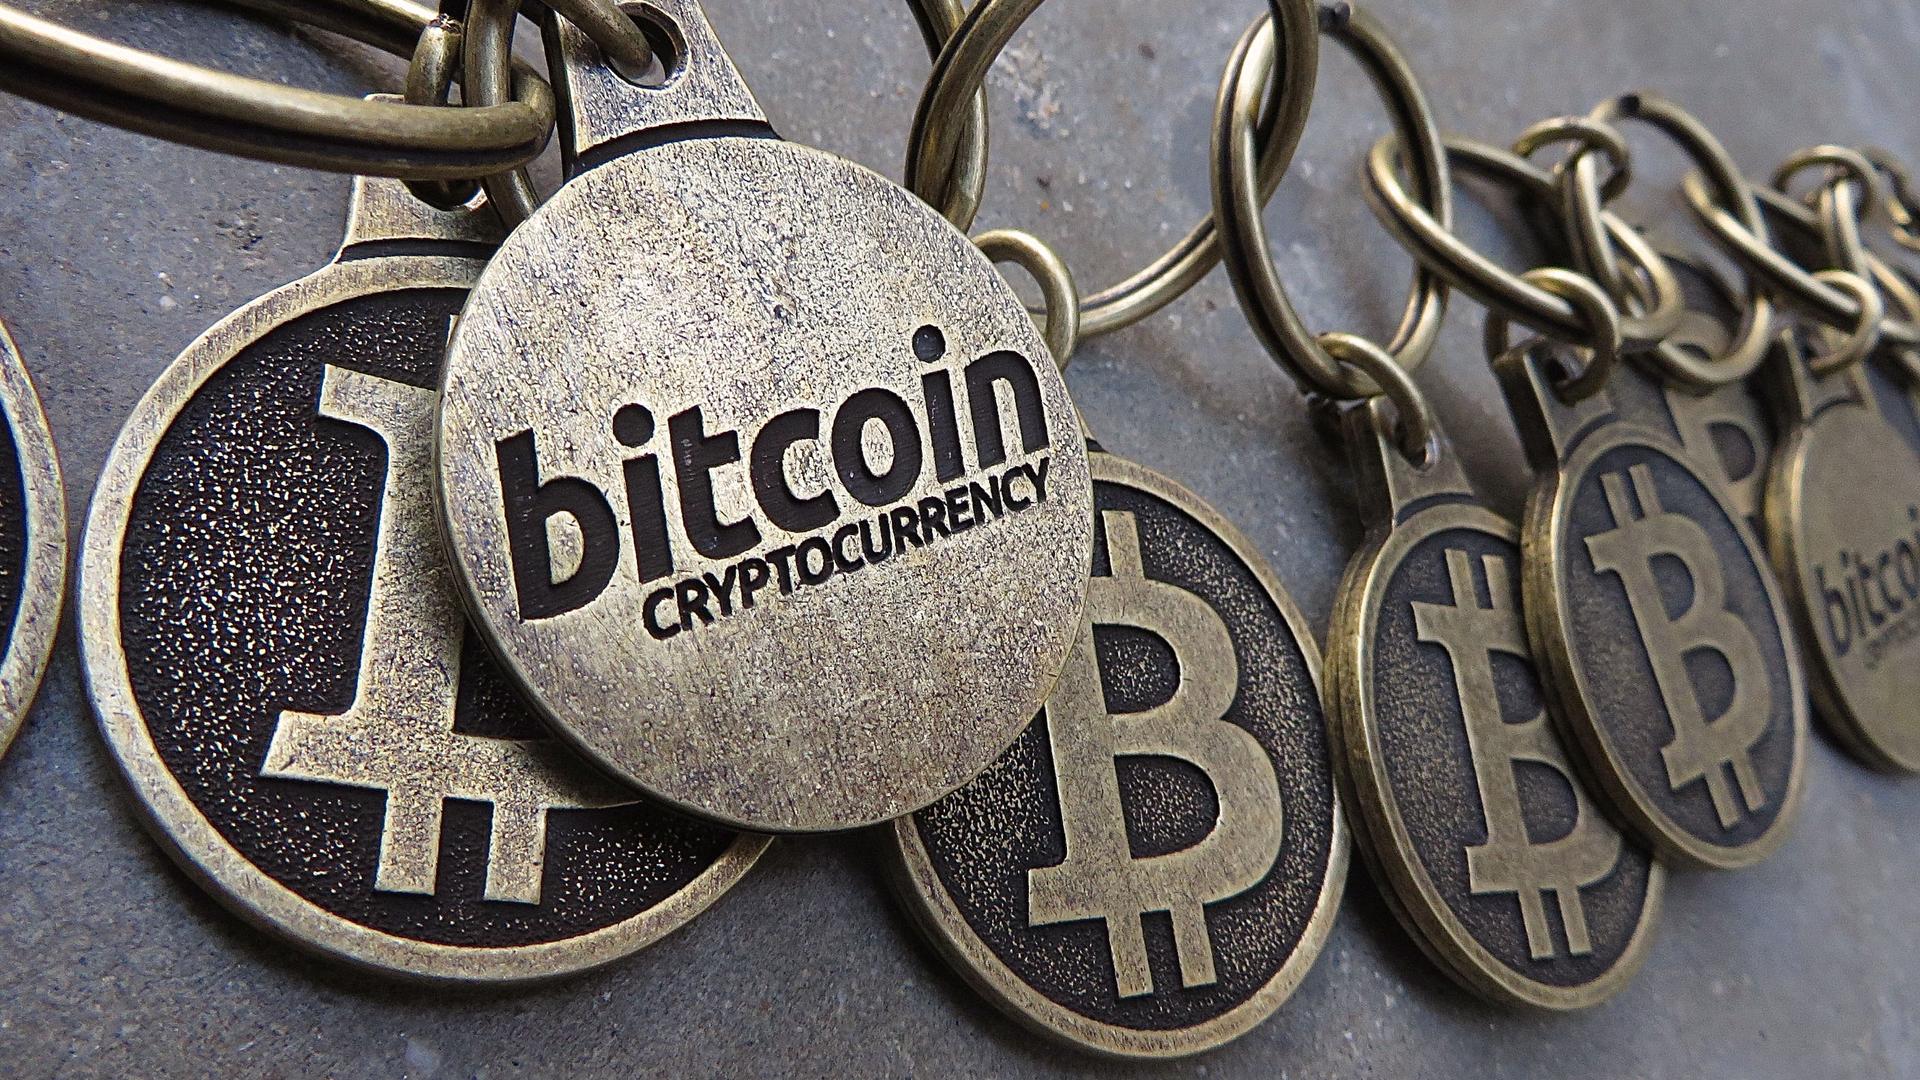 Chain of Bitcoin keychains, symbolizing the Bitcoin Blockchain.